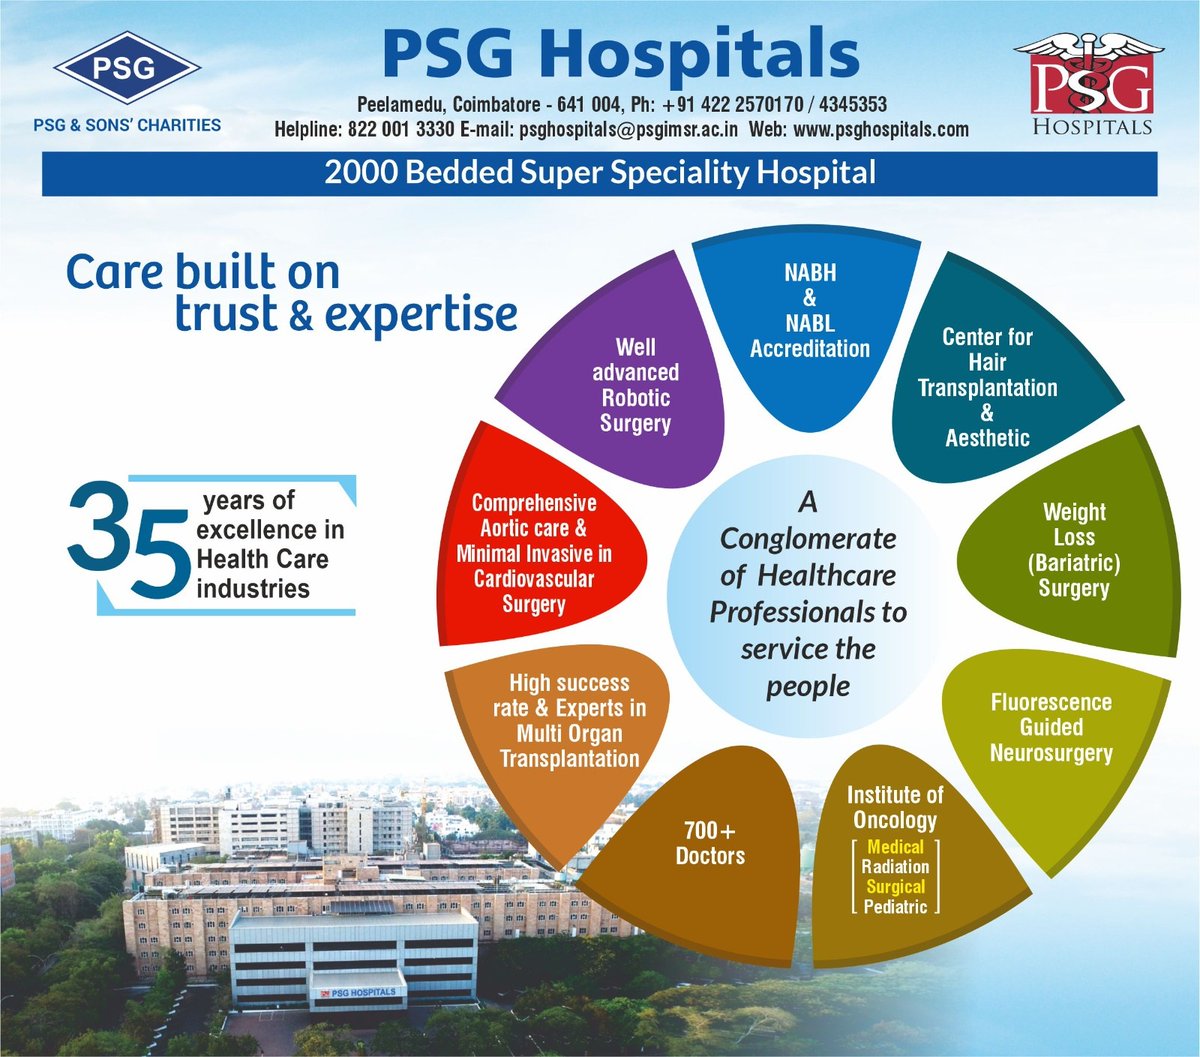 Bringing You The Best Healthcare #PSG #PSGHospitals #psgimsr #psgsuperspeciality #healthcarefacilities #healthcare #hospitals #healthcareindustry #doctor #hospitalmanagement #hospitalequipment #medicines #India